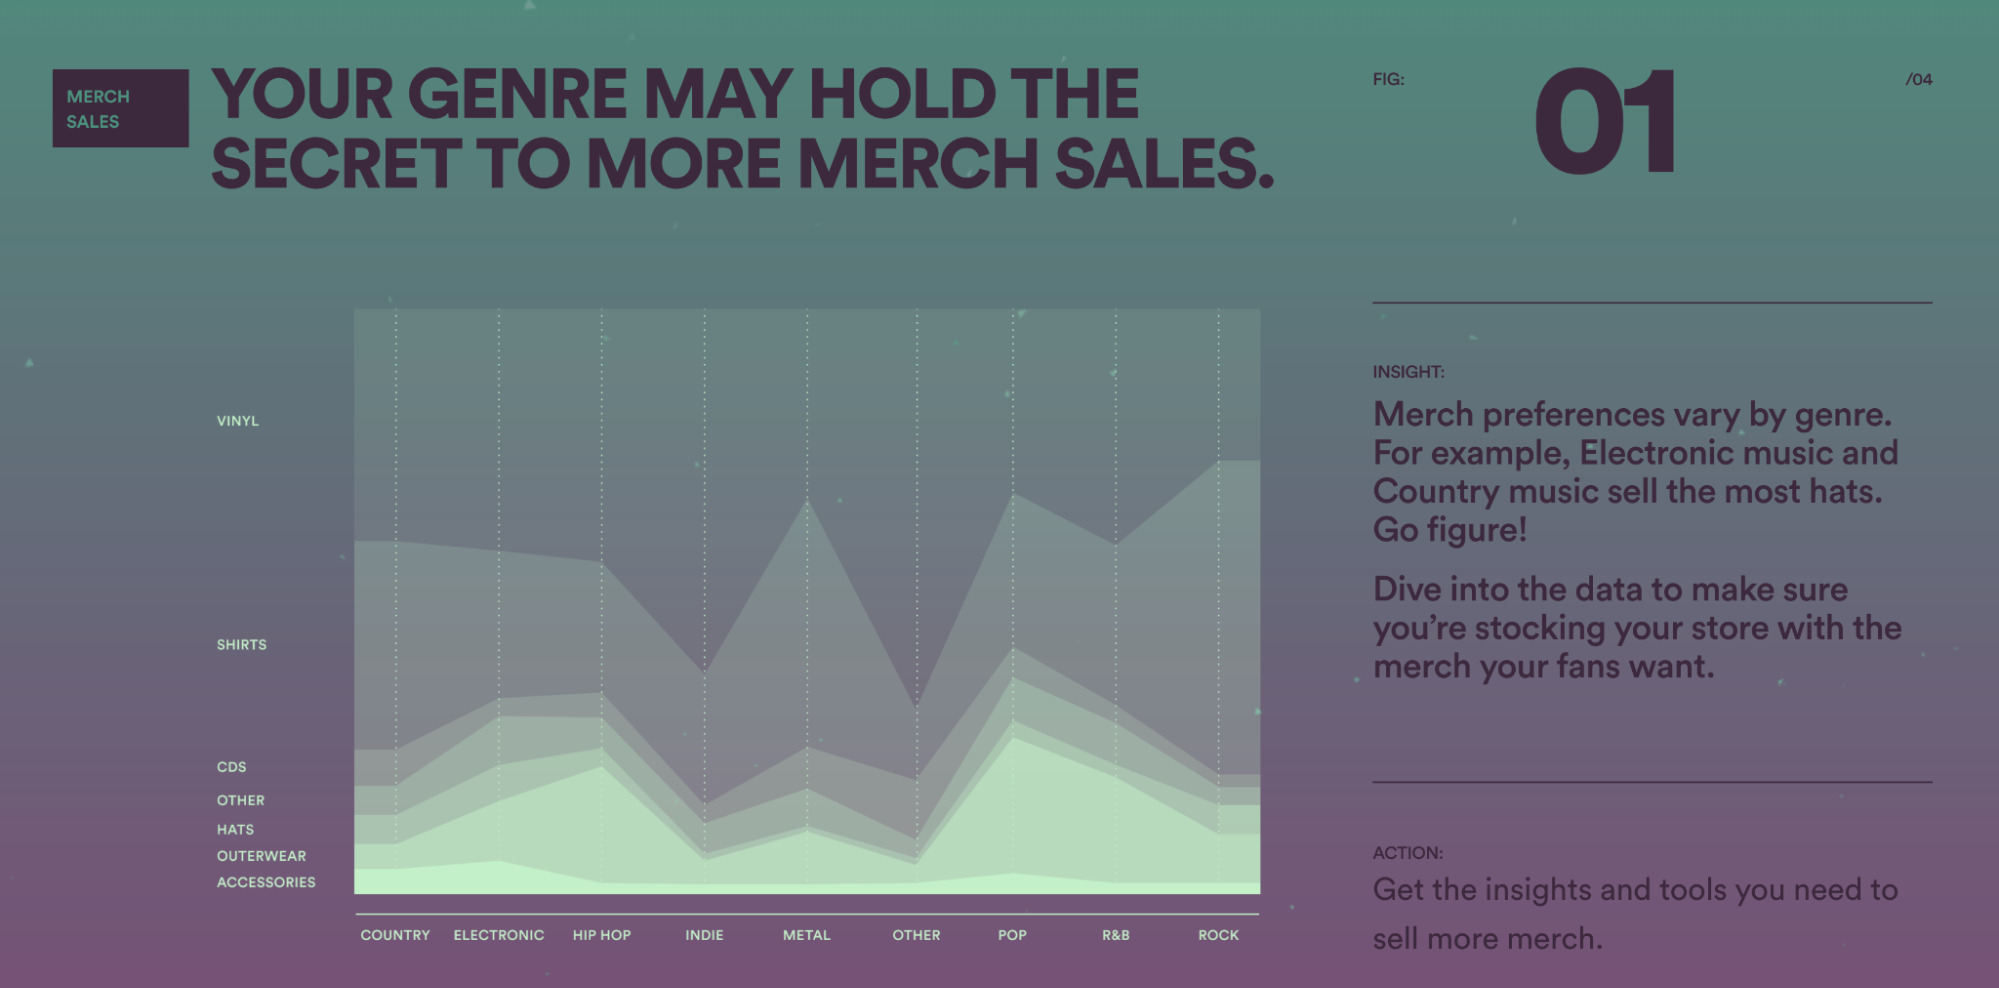 Spotify's stats on merch